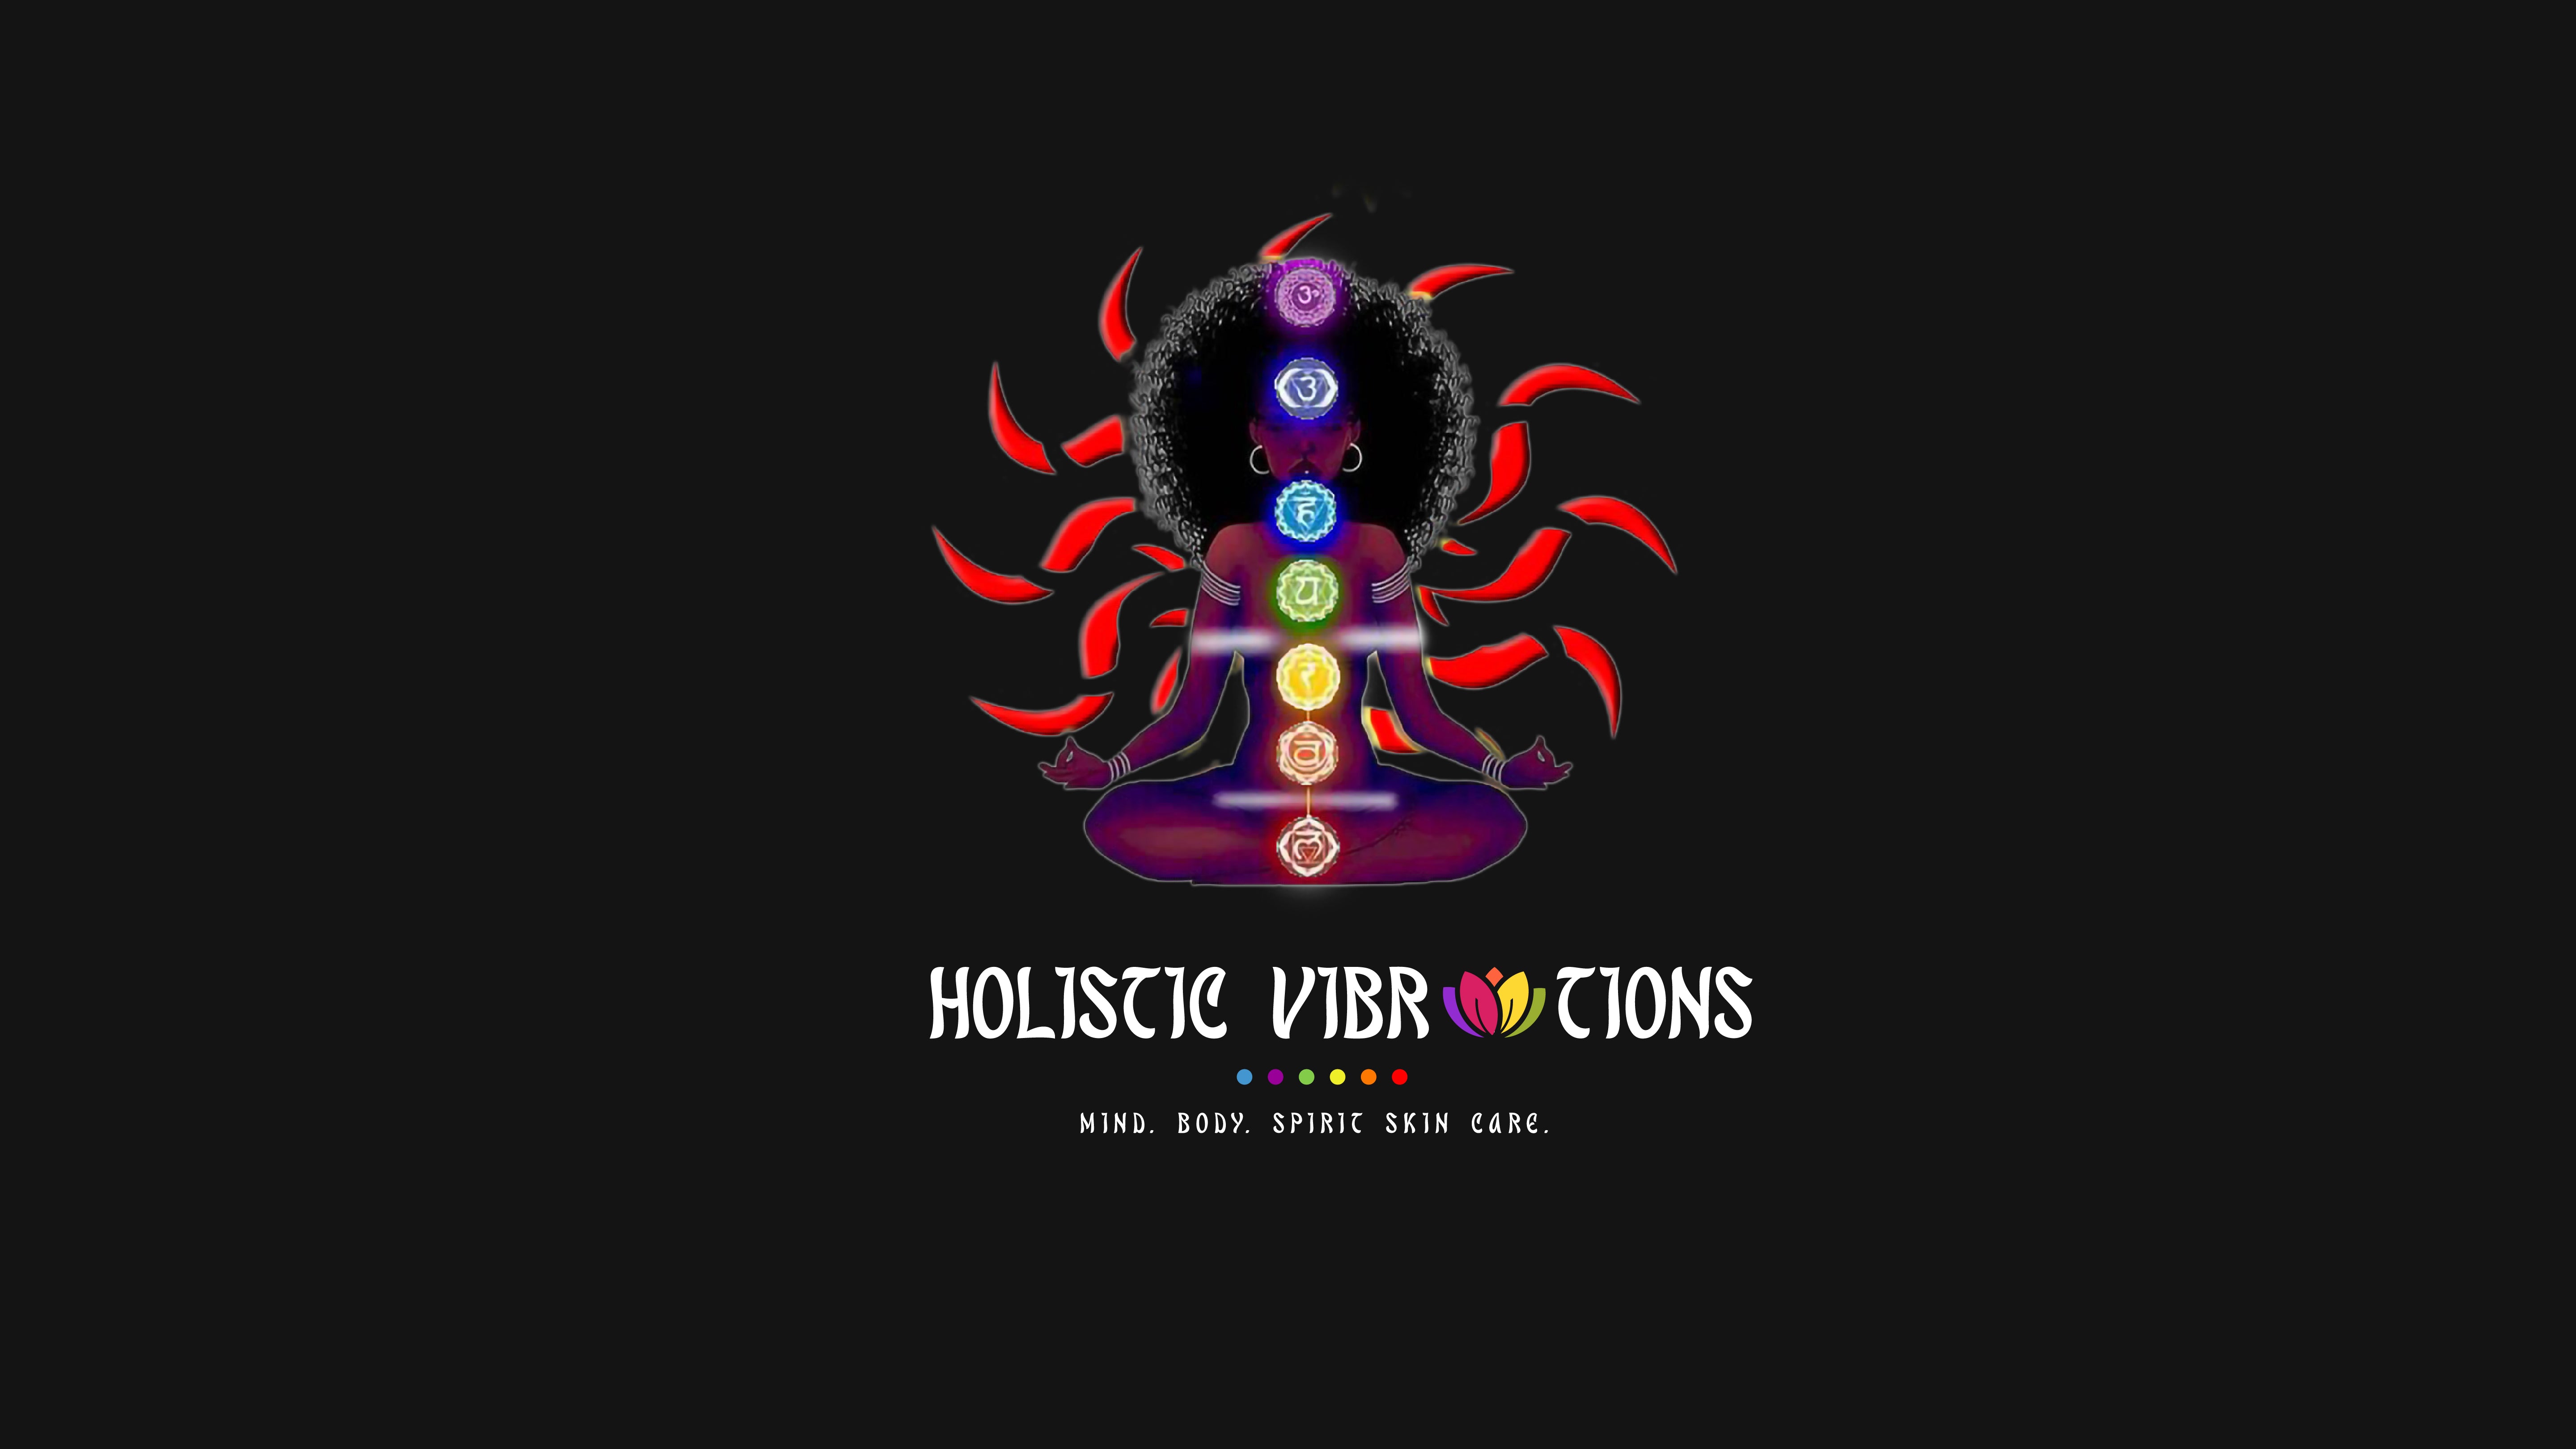 Holistic Vibrations Detox House Donations